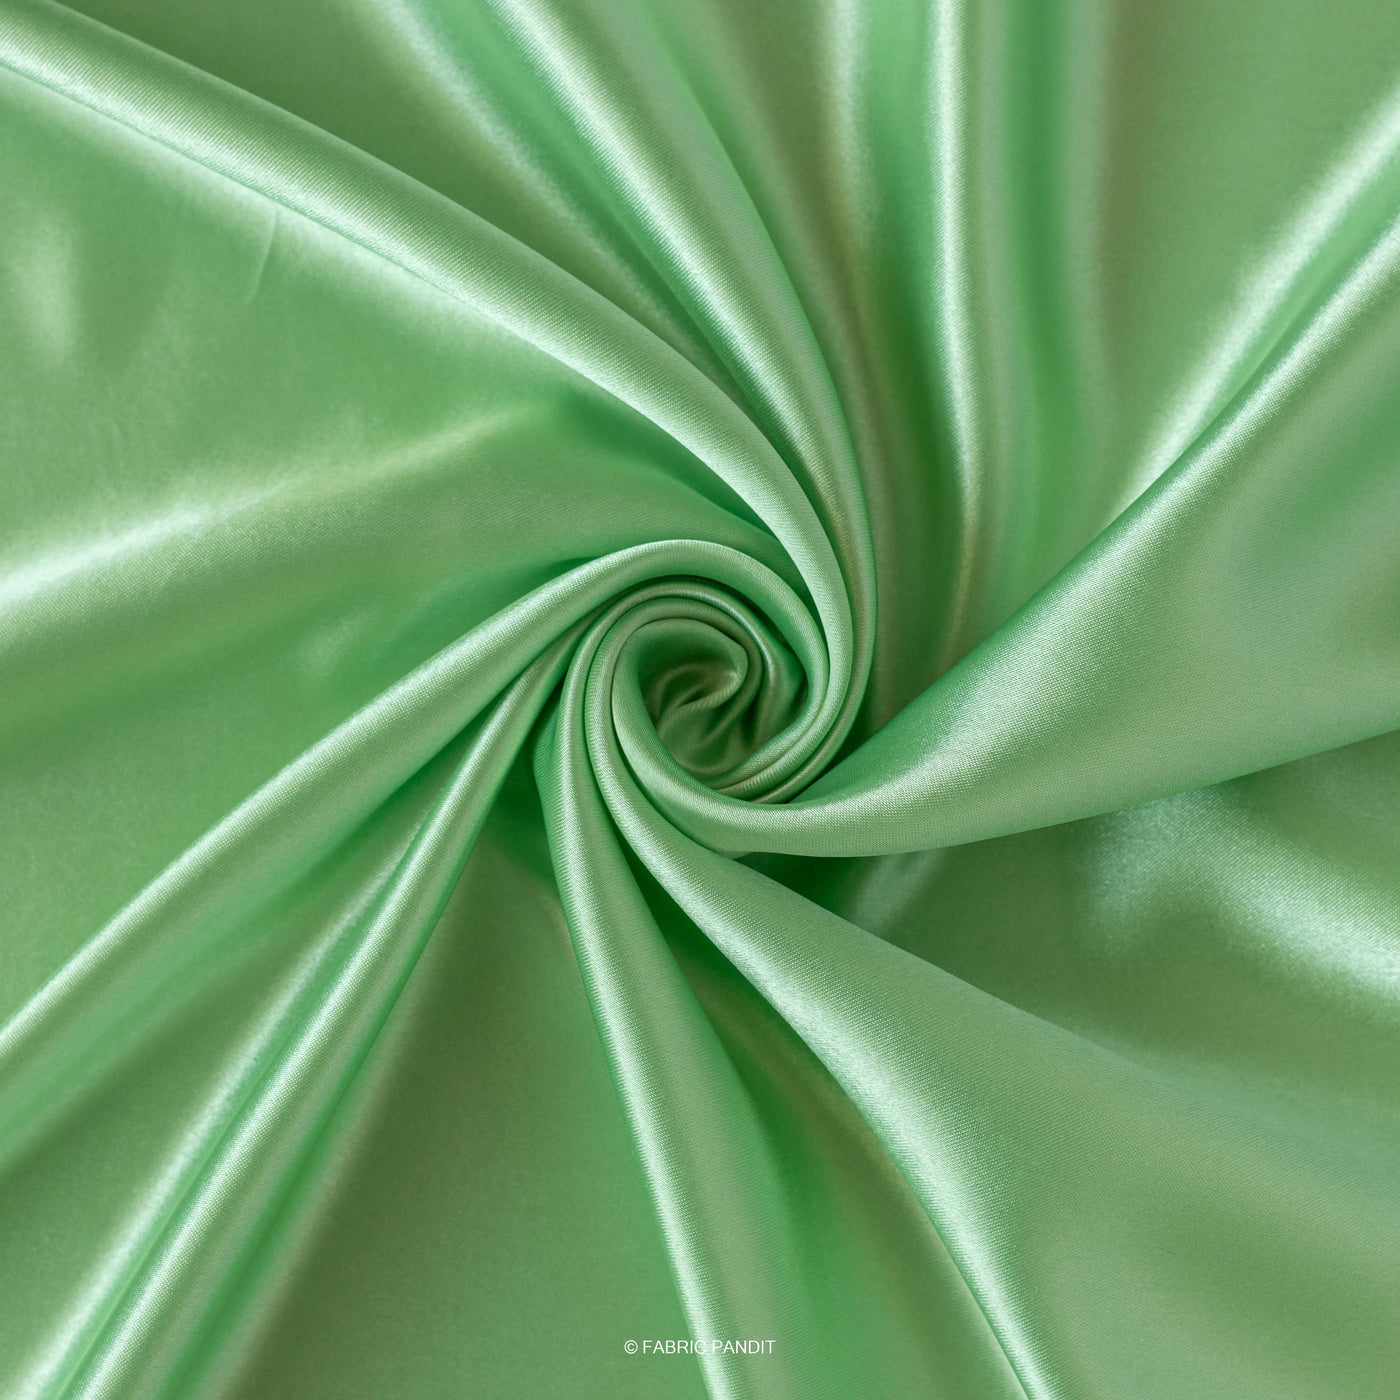 Fabric Pandit Fabric Light Fern Green Plain Premium Ultra Satin Fabric (Width 44 Inches)